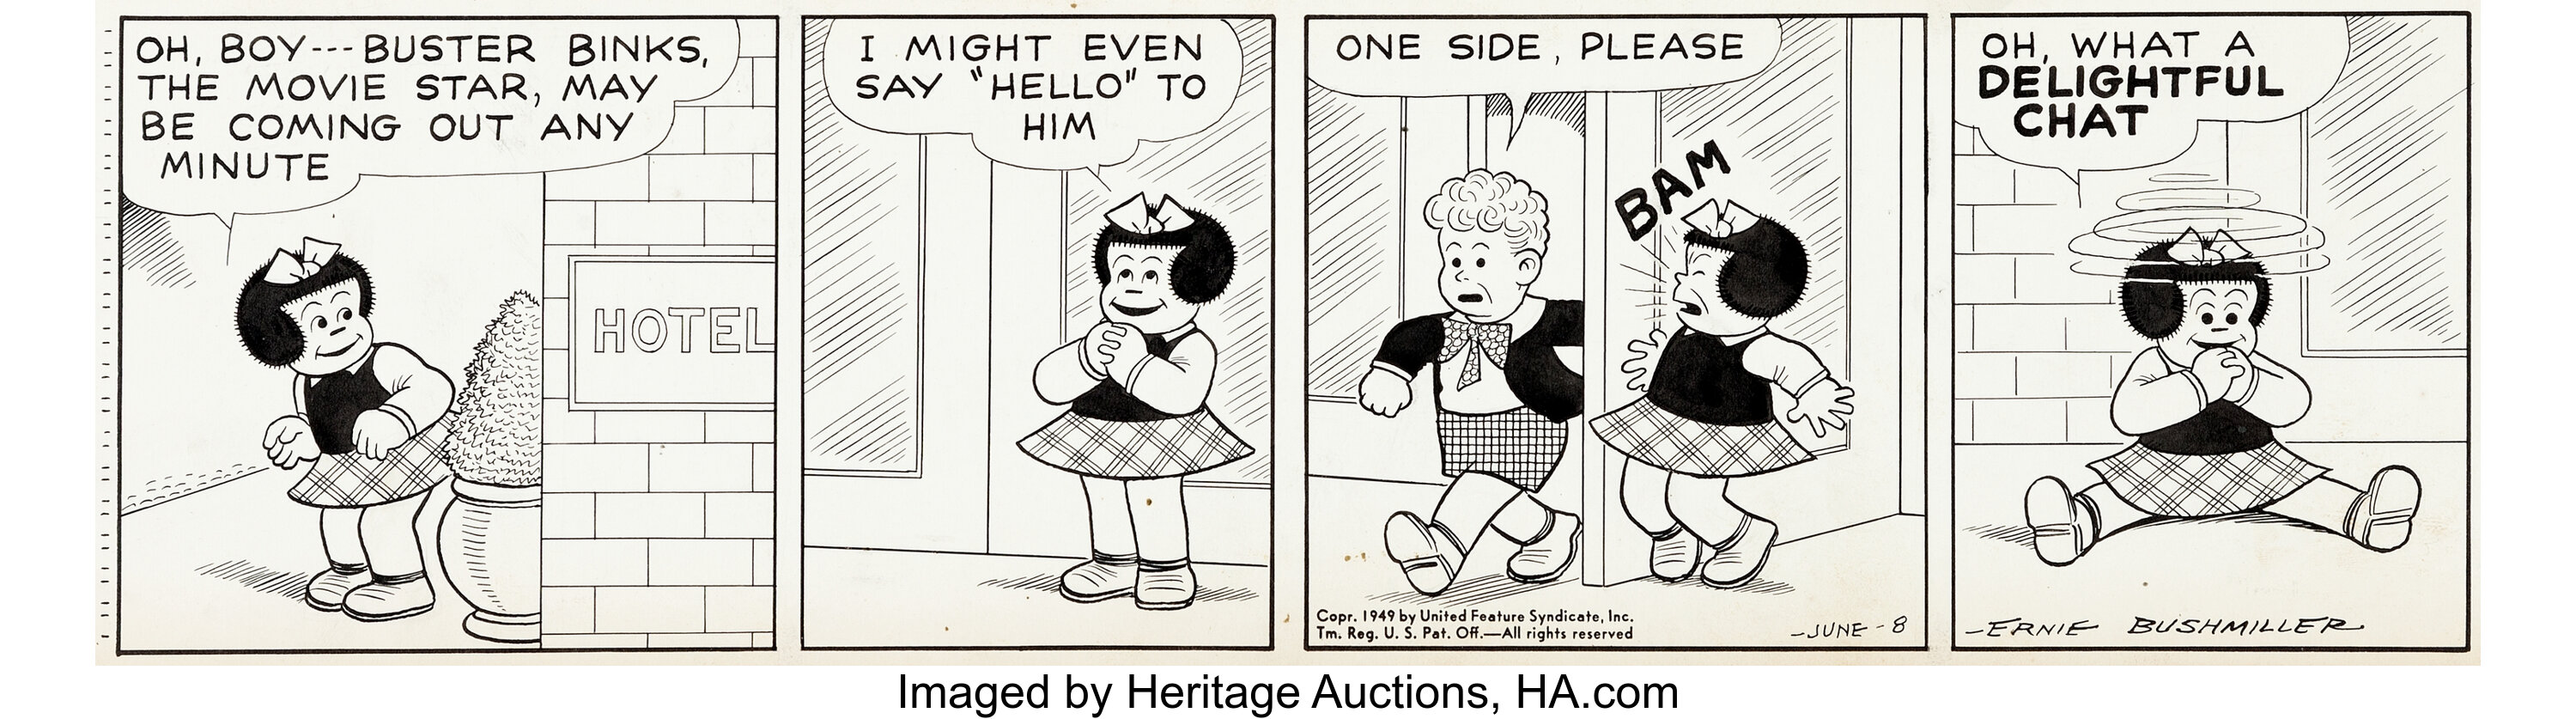 Ernie Bushmiller Nancy Daily Comic Strip Original Art Dated 6 8 49 Lot 93419 Heritage Auctions